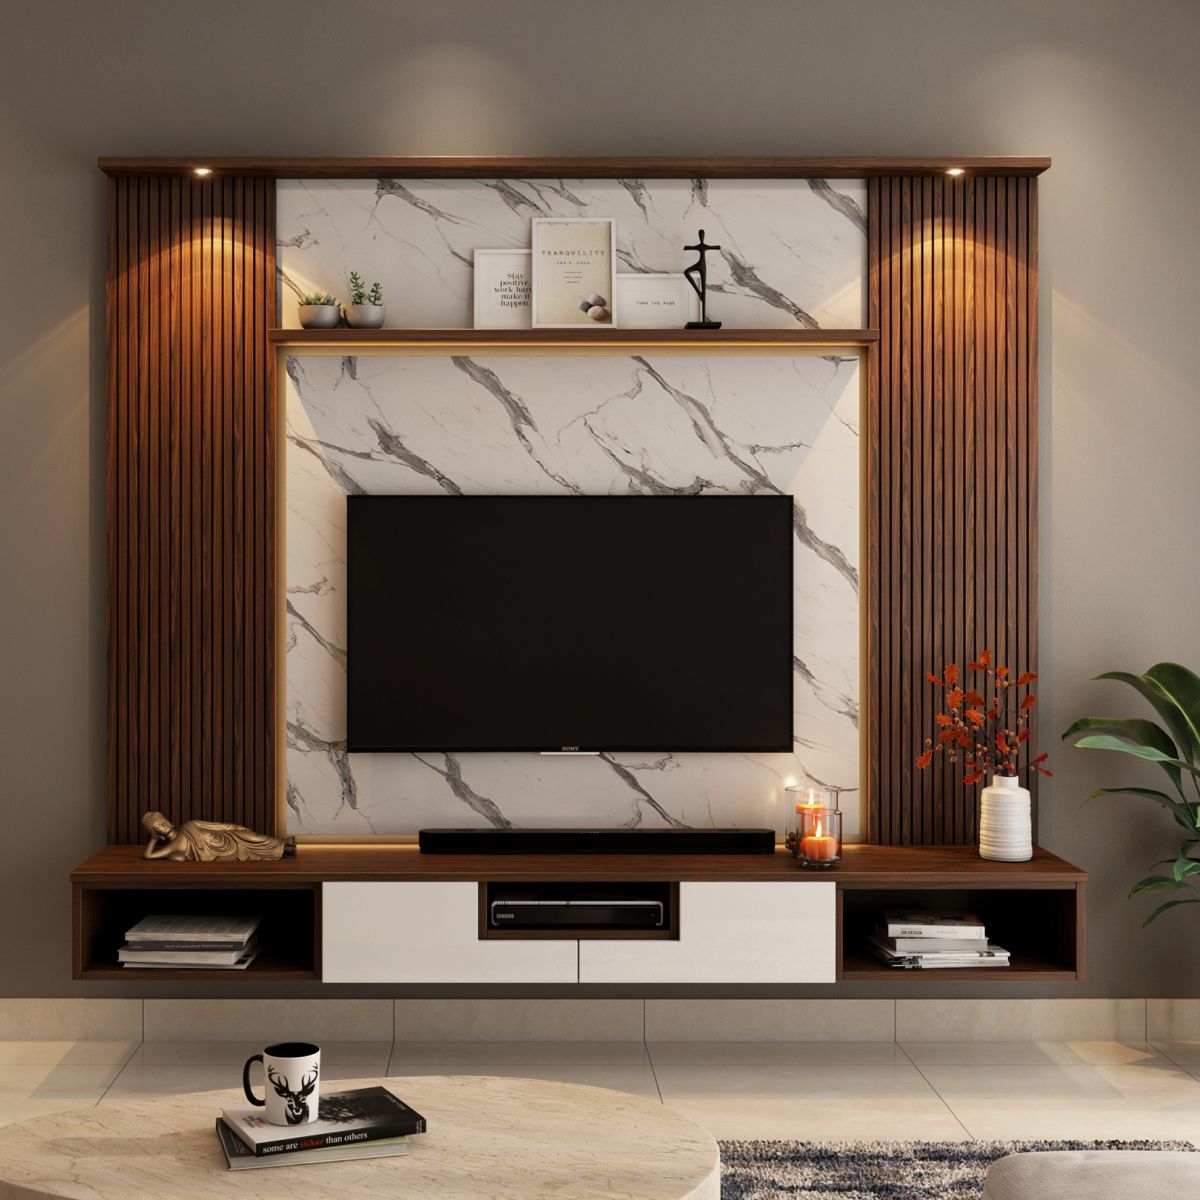 Nord Slat Panels in a Bedroom, Kitchen, or Living Room